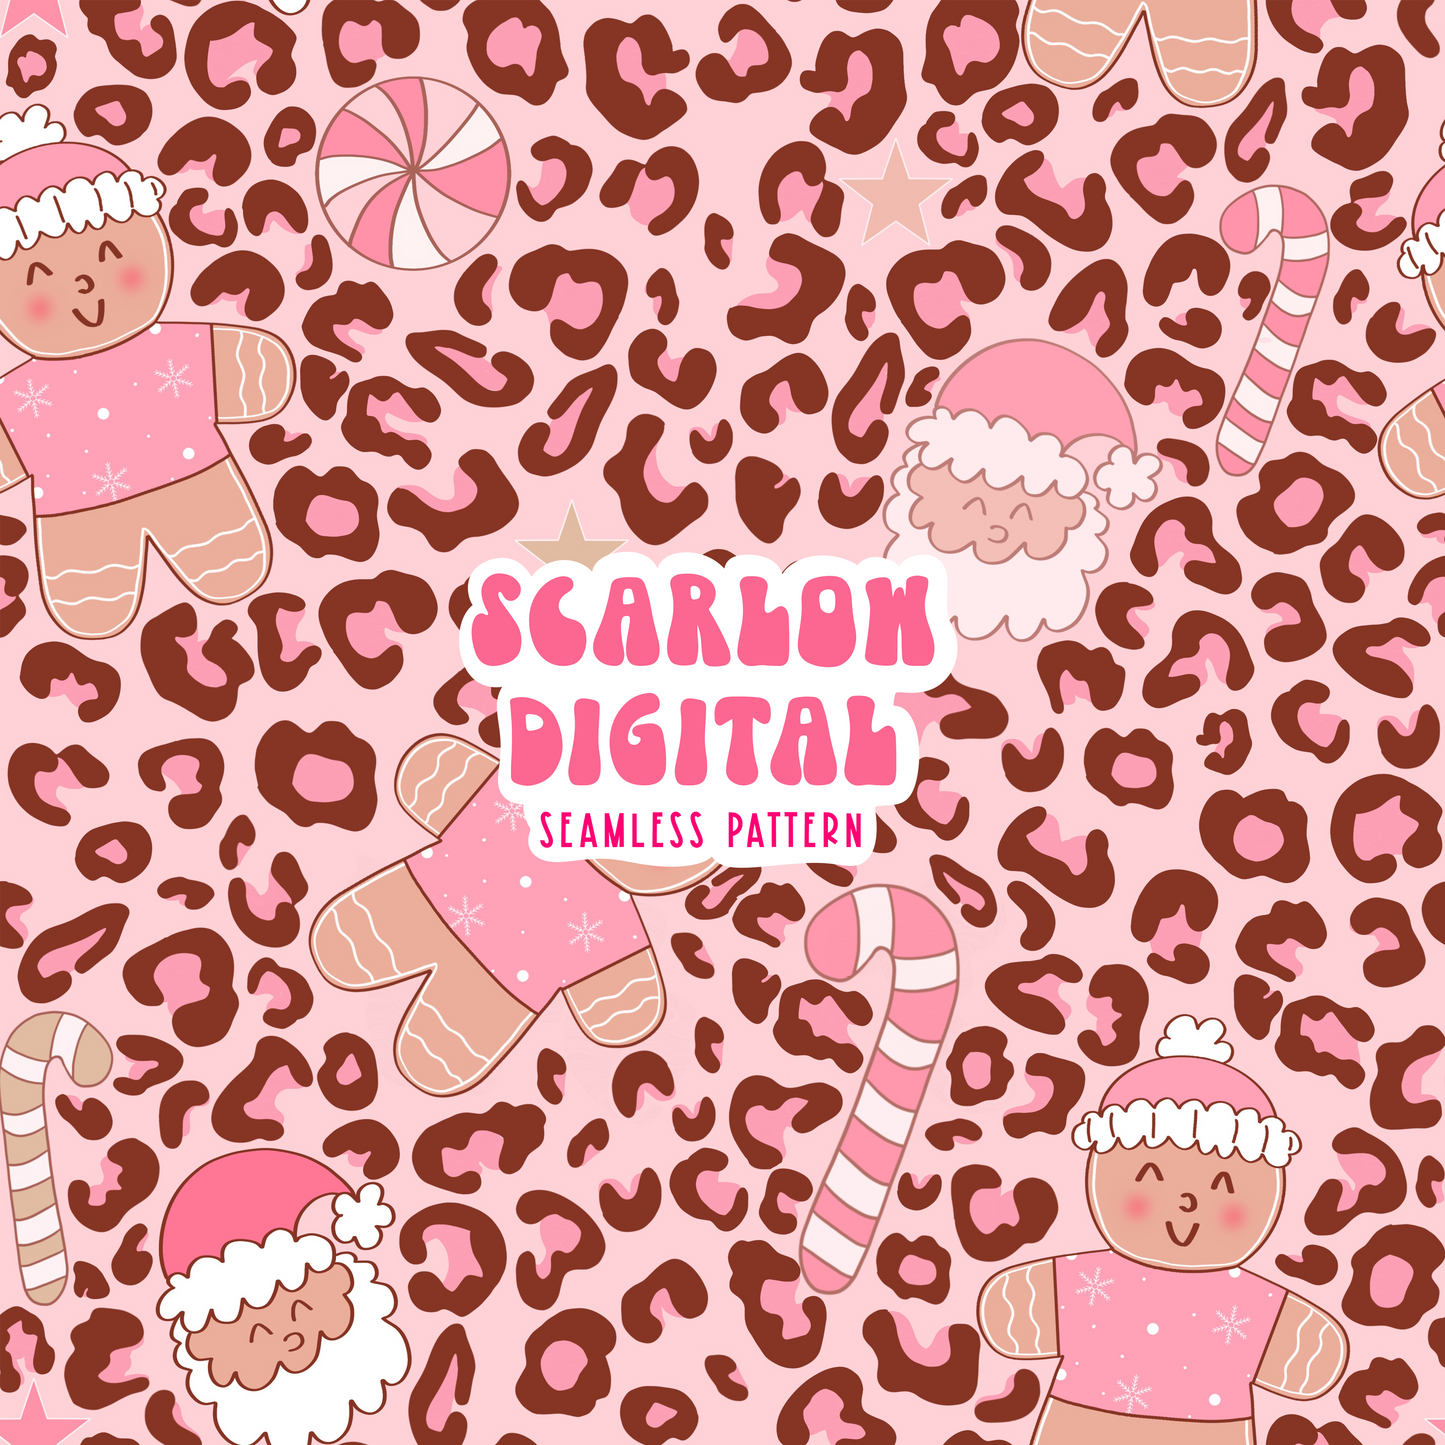 Leopard Print Seamless Pattern-Christmas Sublimation Digital Design Download-candy cane seamless, gingerbread man seamless, santa seamless